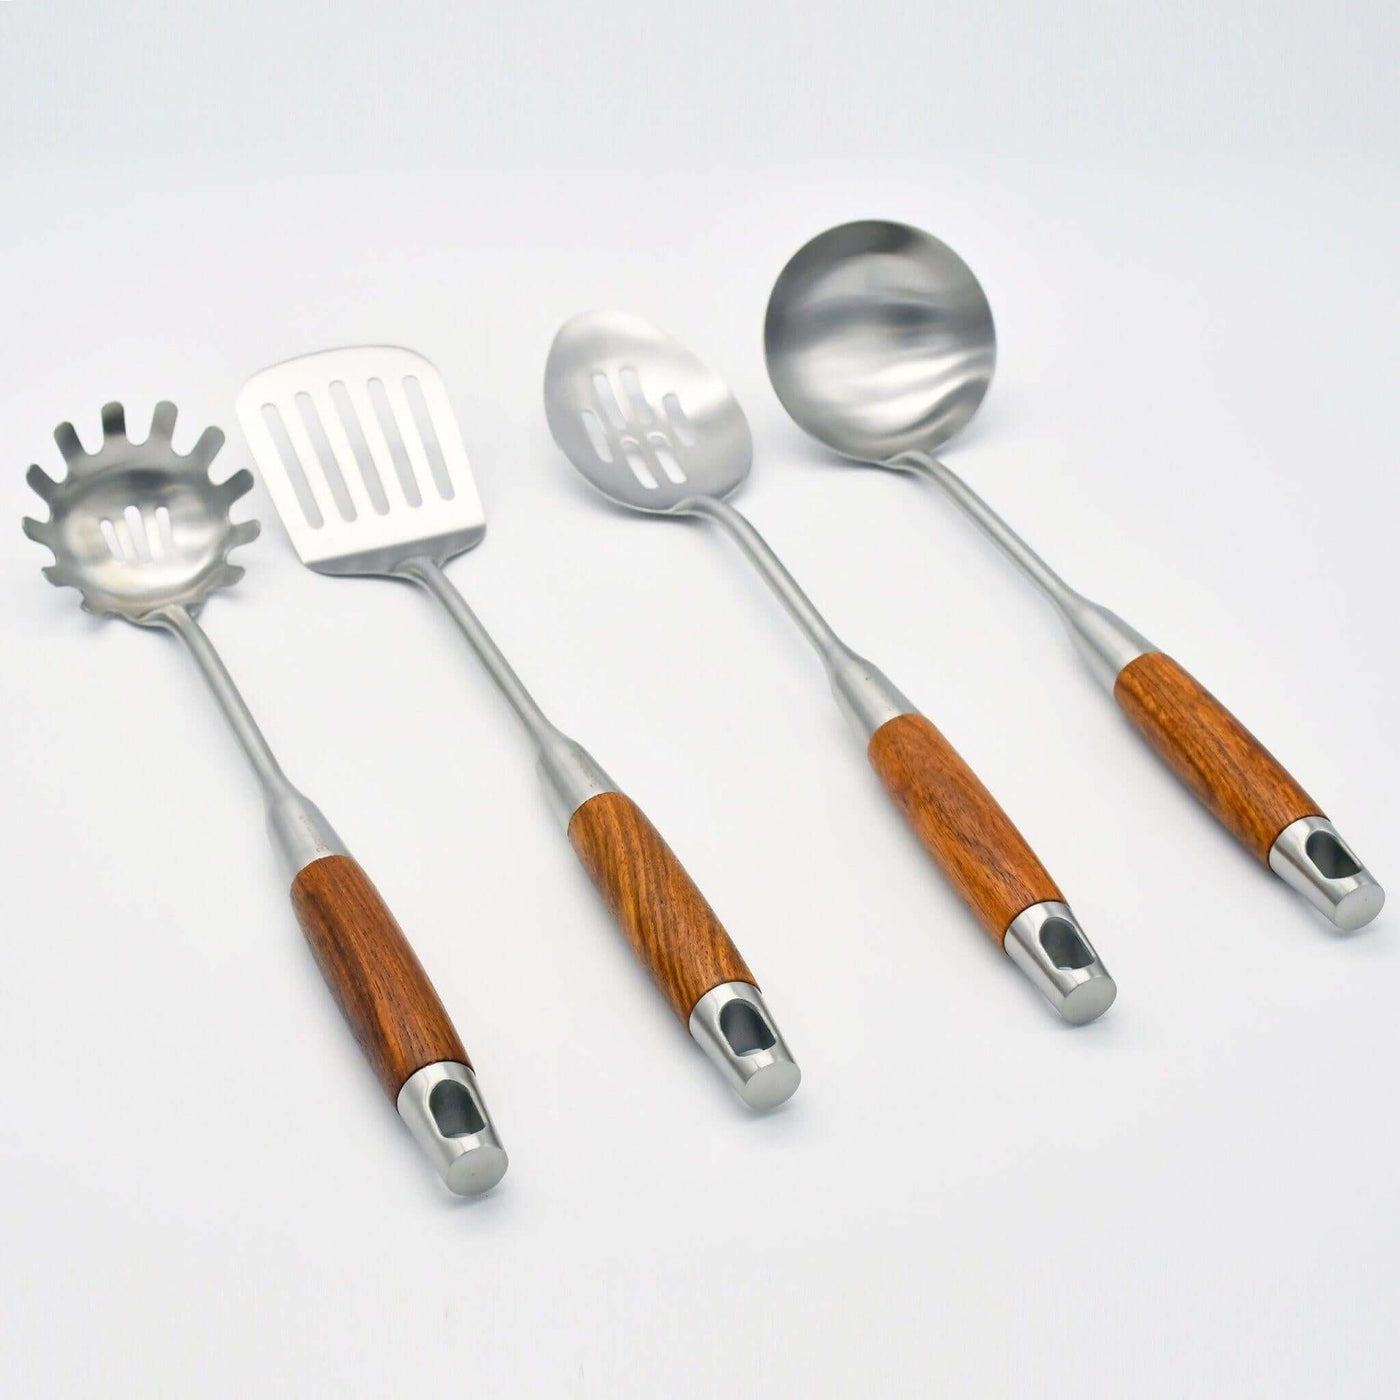 Barenthal 4-piece 304 Stainless Steel Kitchen Utensils Set, kitchenware tool set with natural wood handles